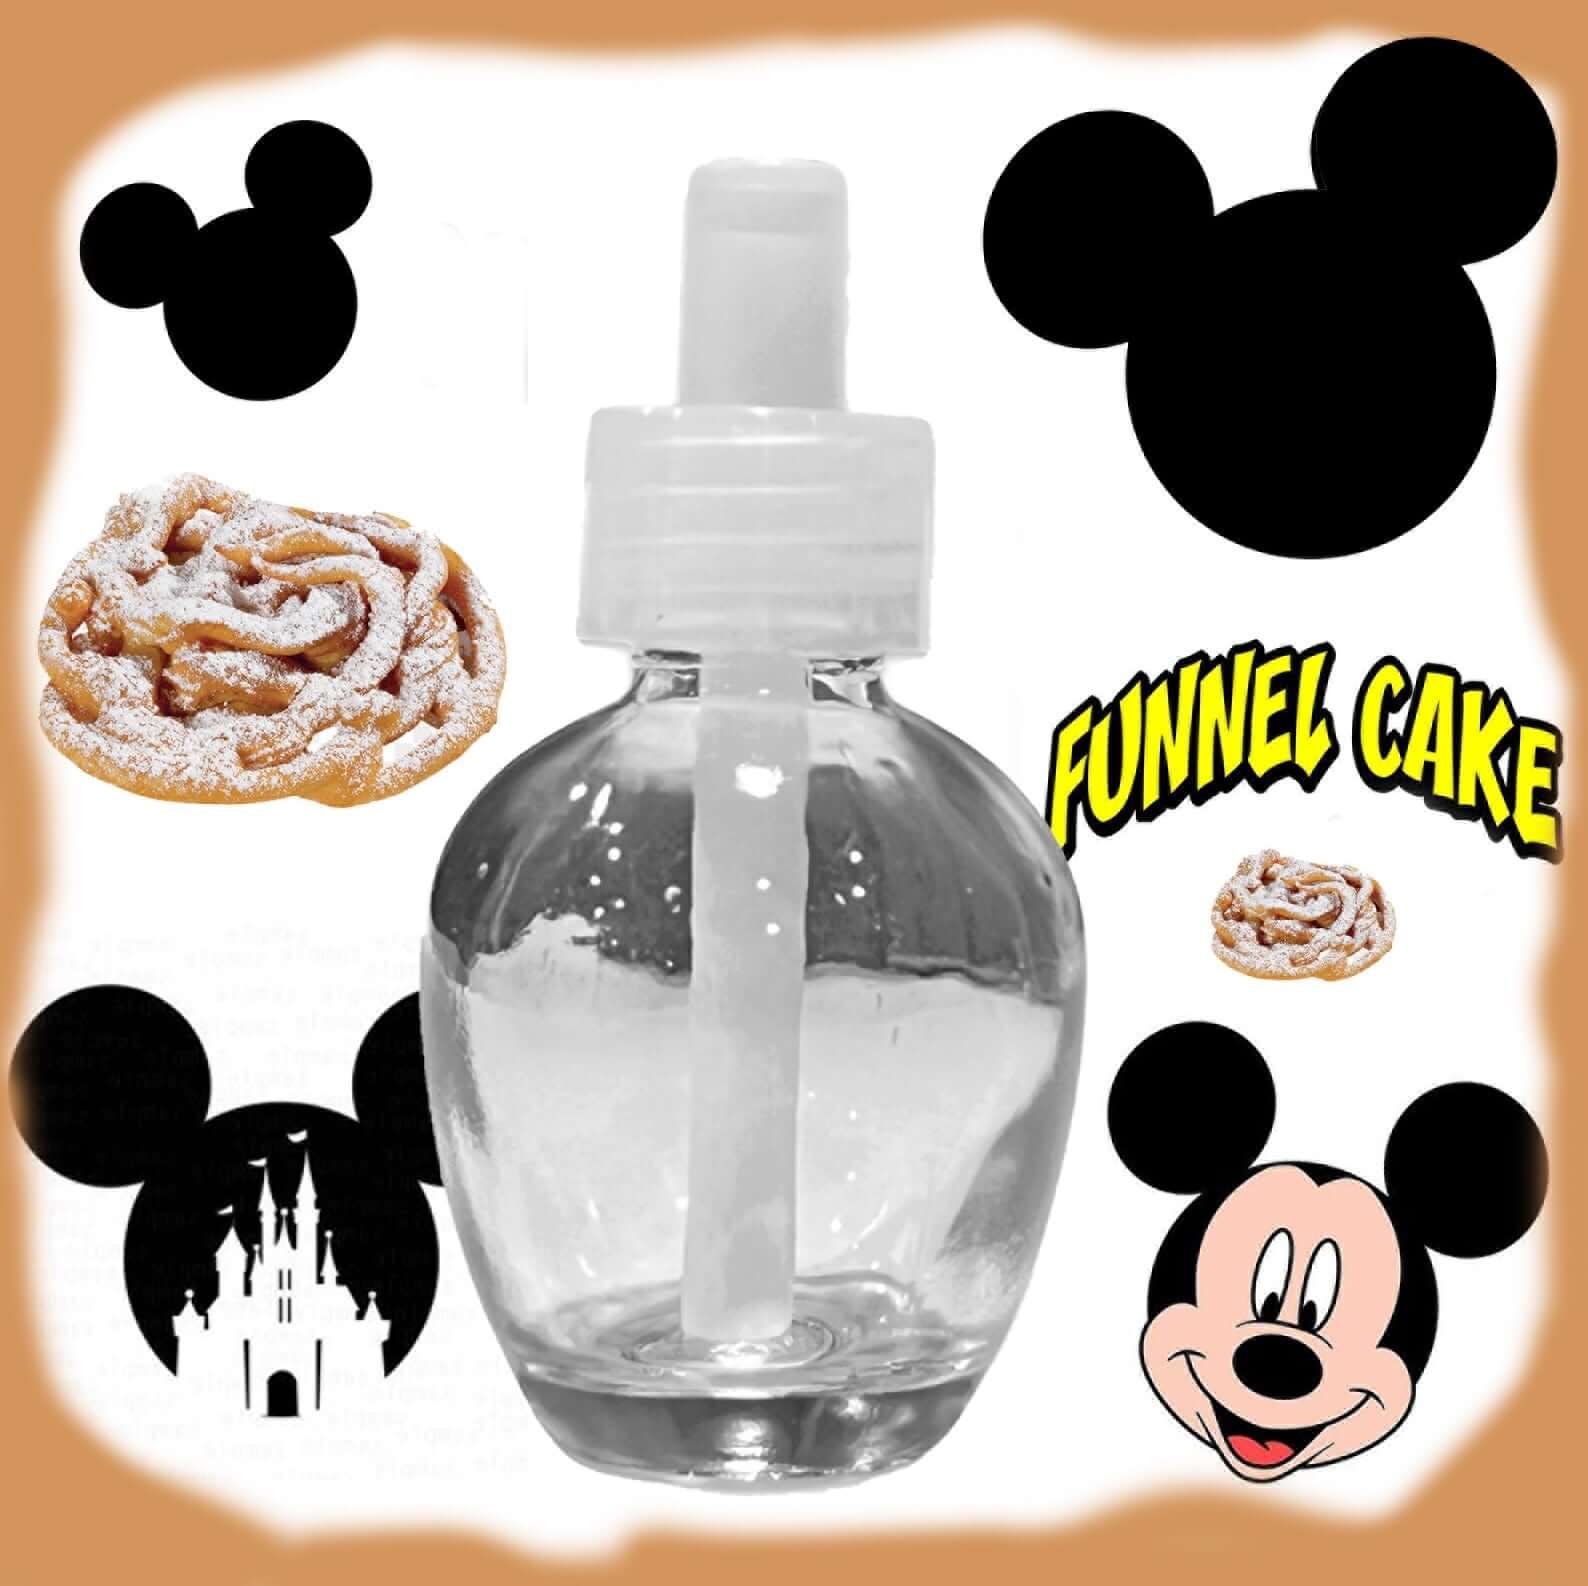 Sleepy Hollow Funnel Cake Fragrance Oil Disney Diffuser